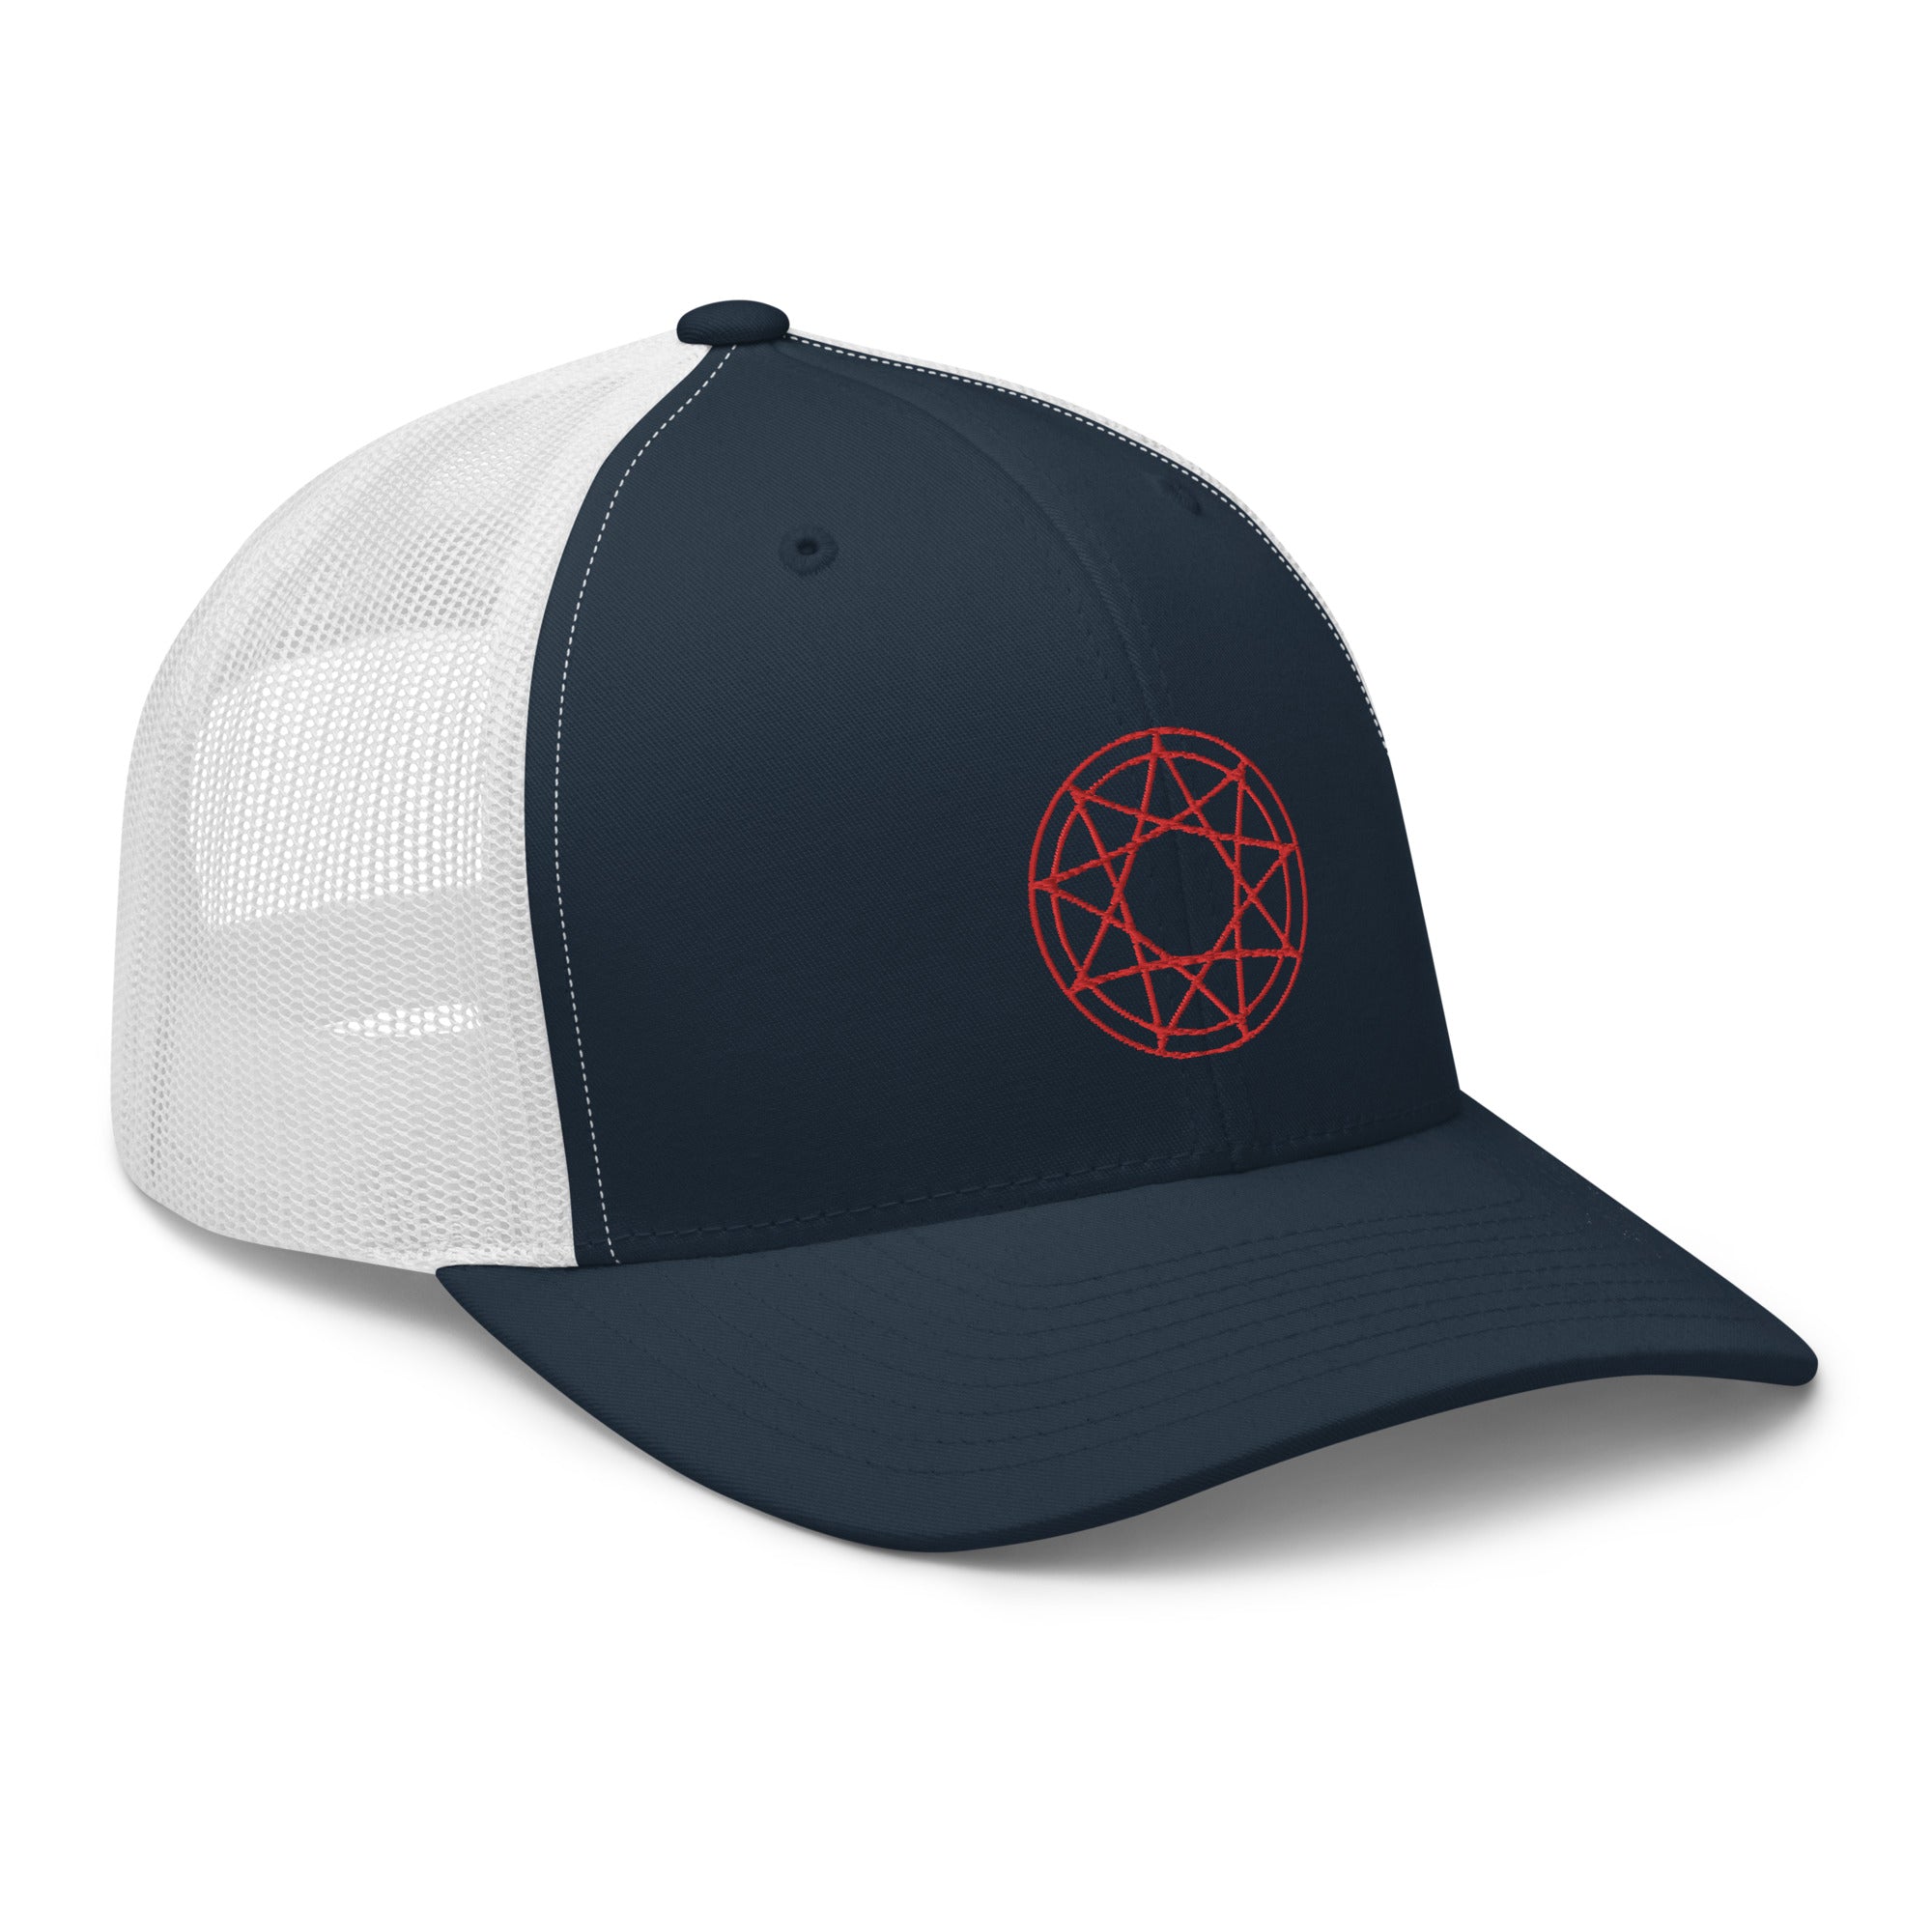 Red 9 Point Star Pentagram Occult Symbol Embroidered Retro Trucker Cap Snapback Hat